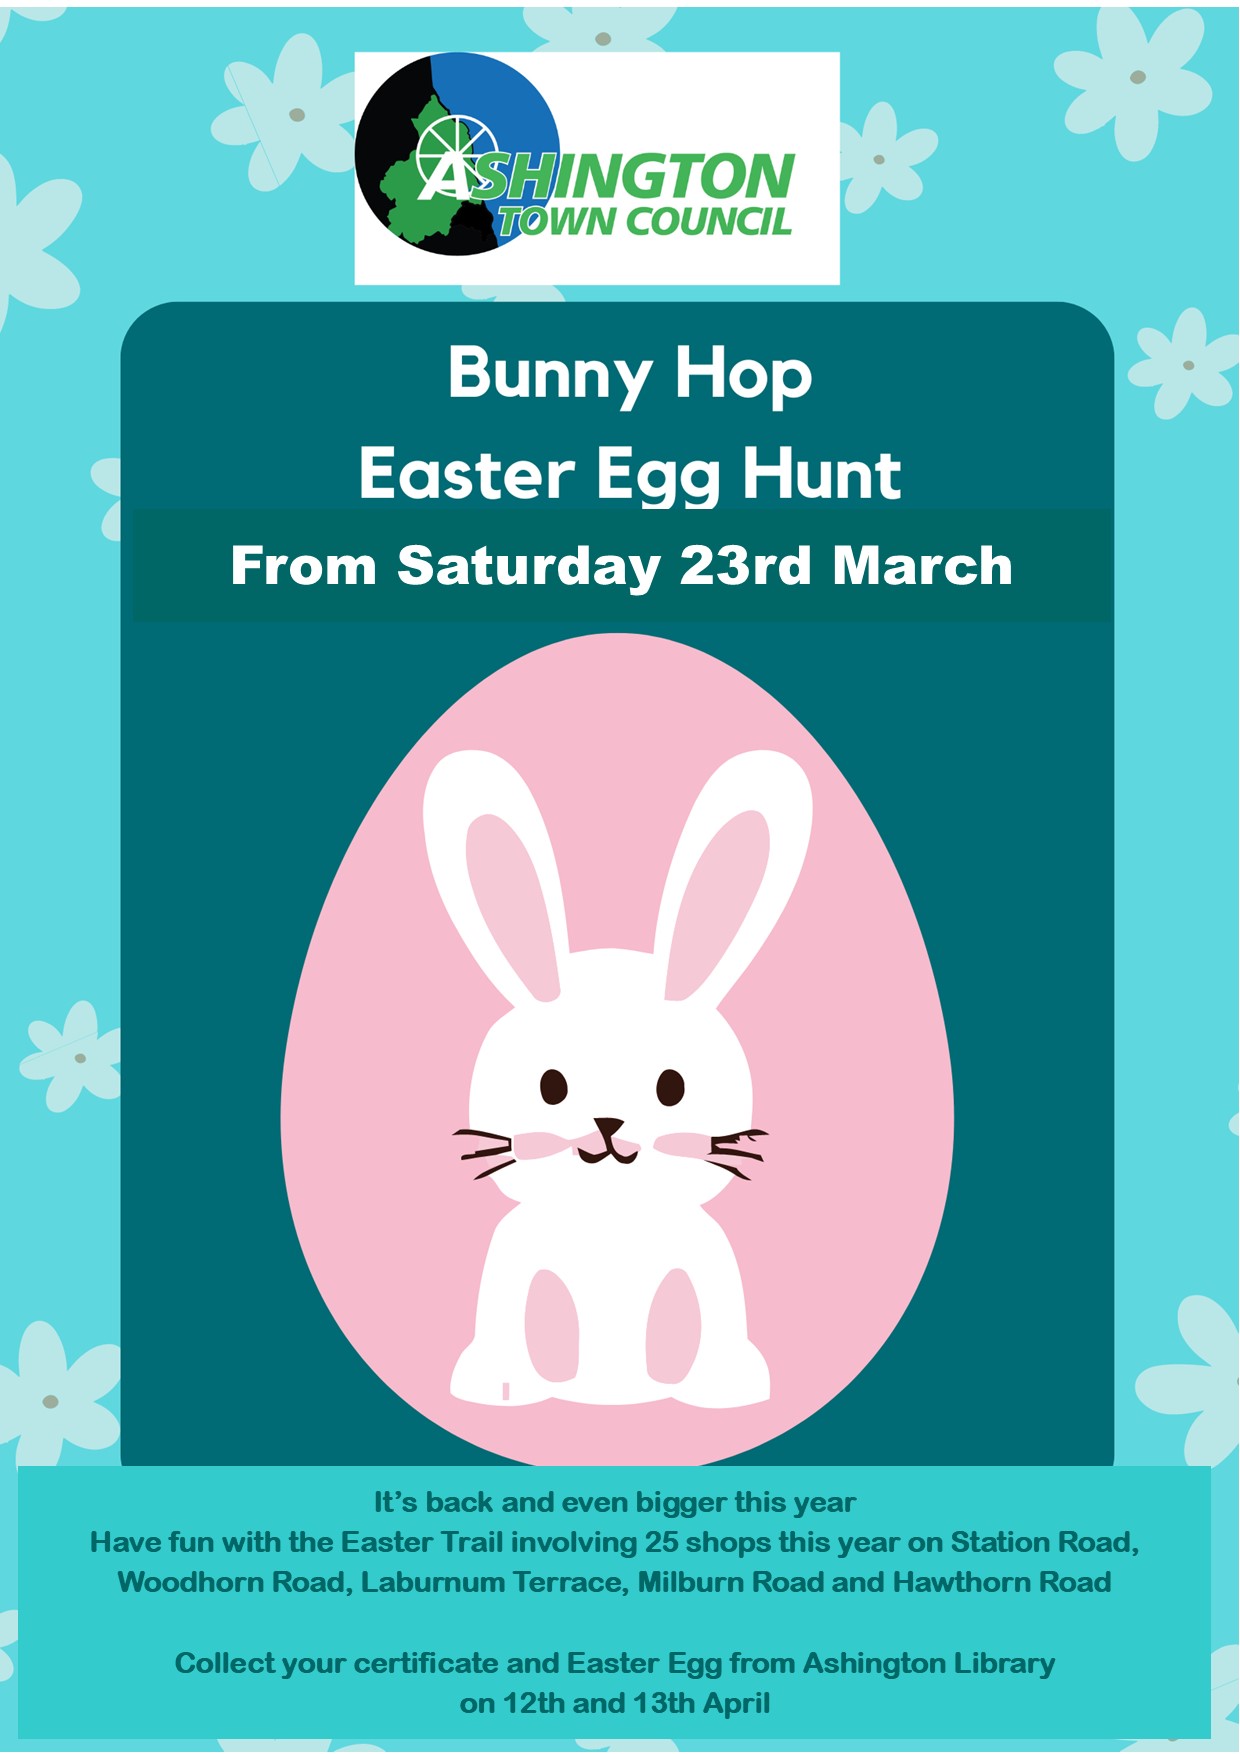 Hop to It! Ashington Town Council Launches Bunny Hop Easter Trail